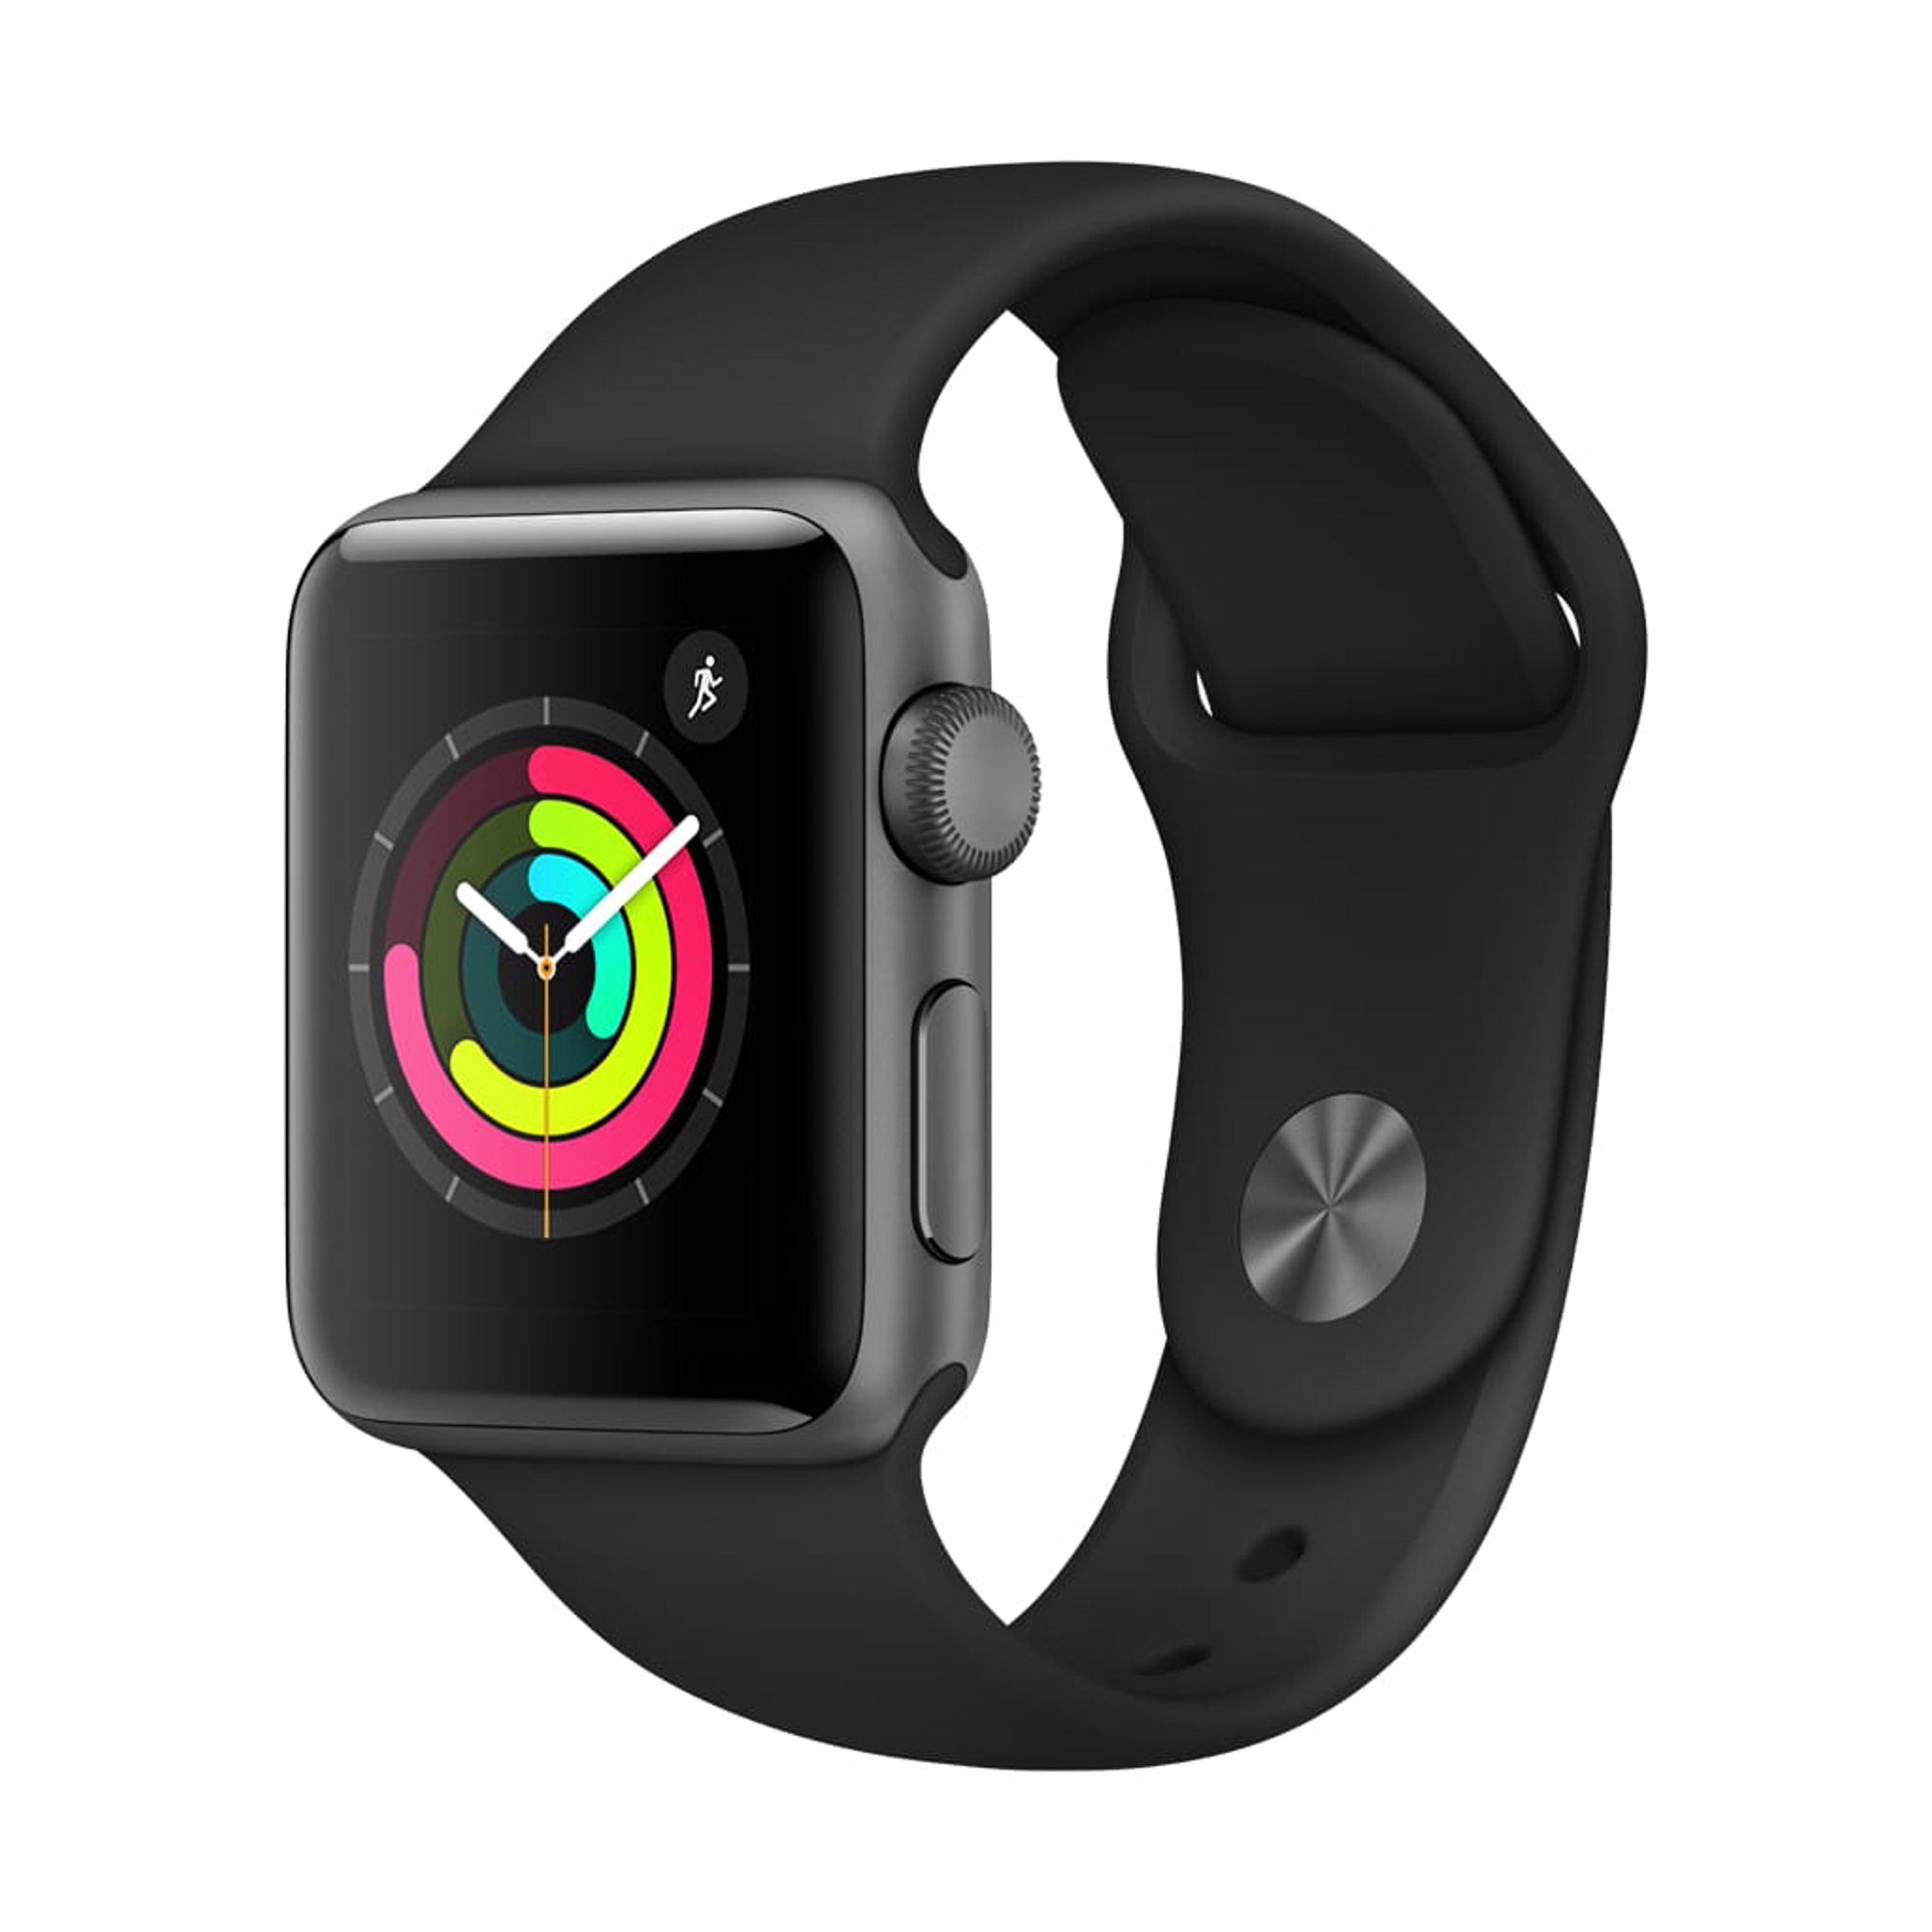 Apple Watch Series 3 $169